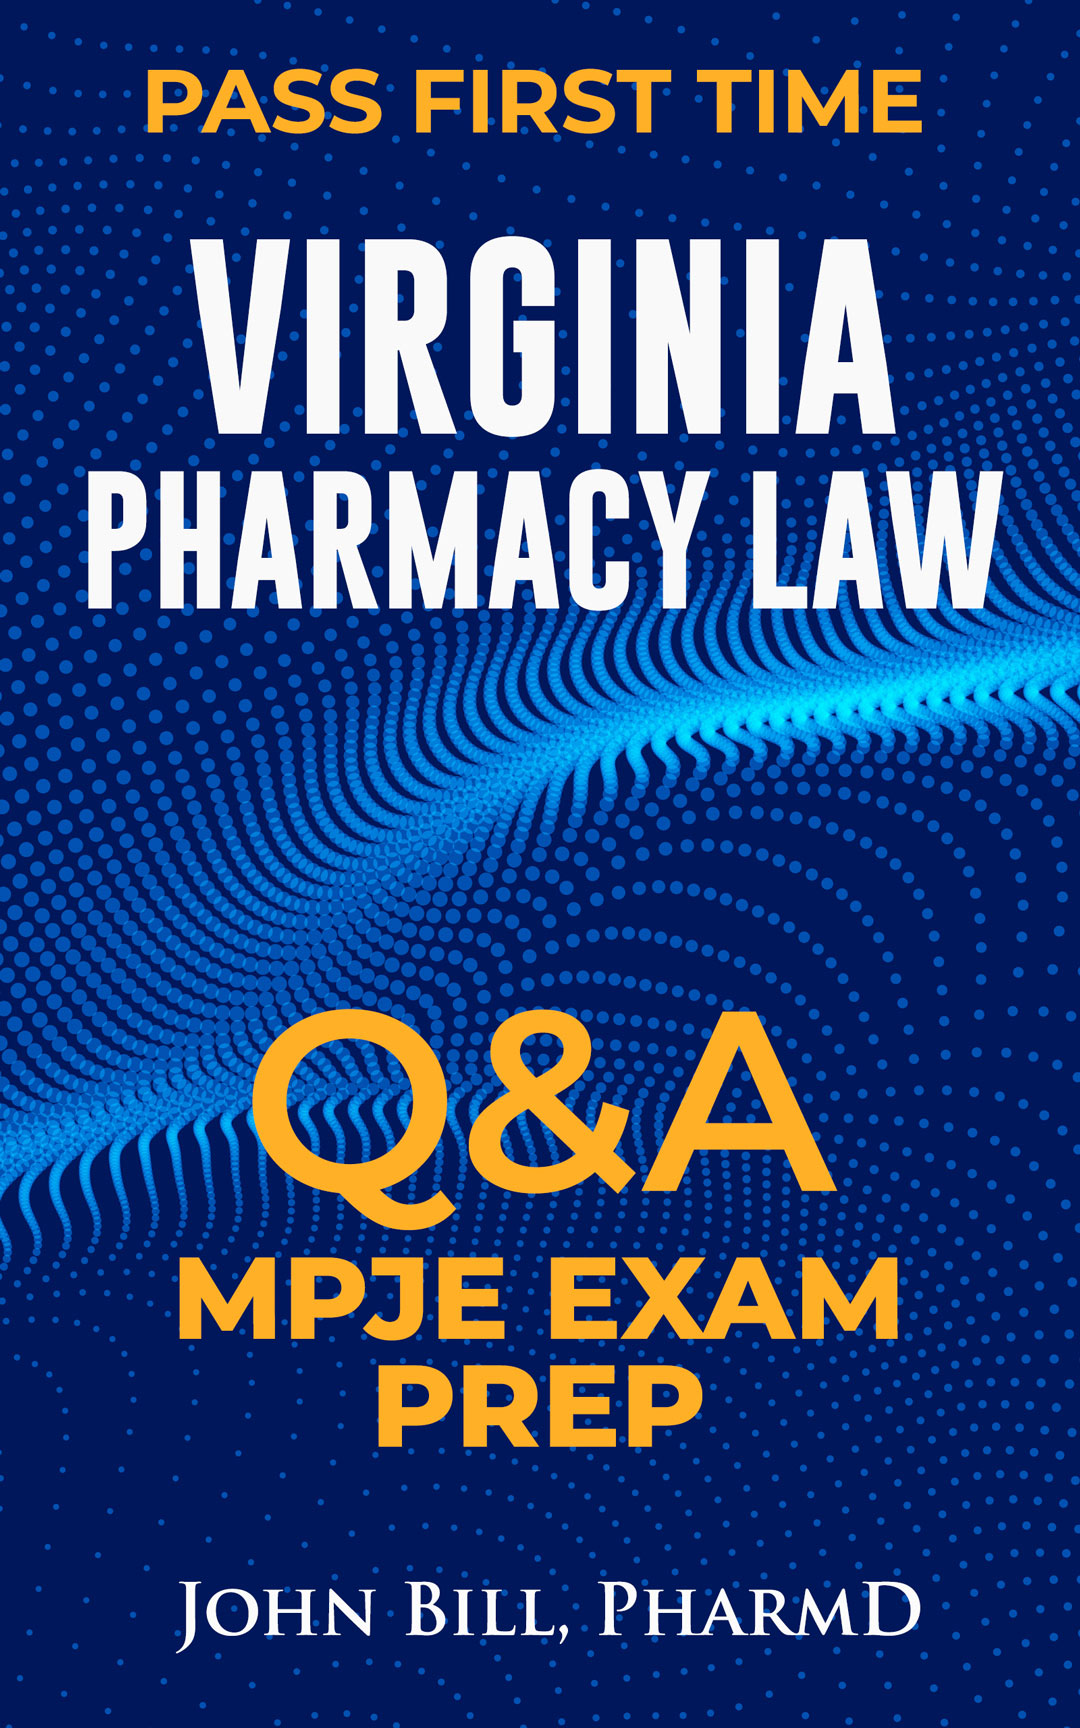 Virginia Pharmacy Law MPJE Exam Prep Q & A